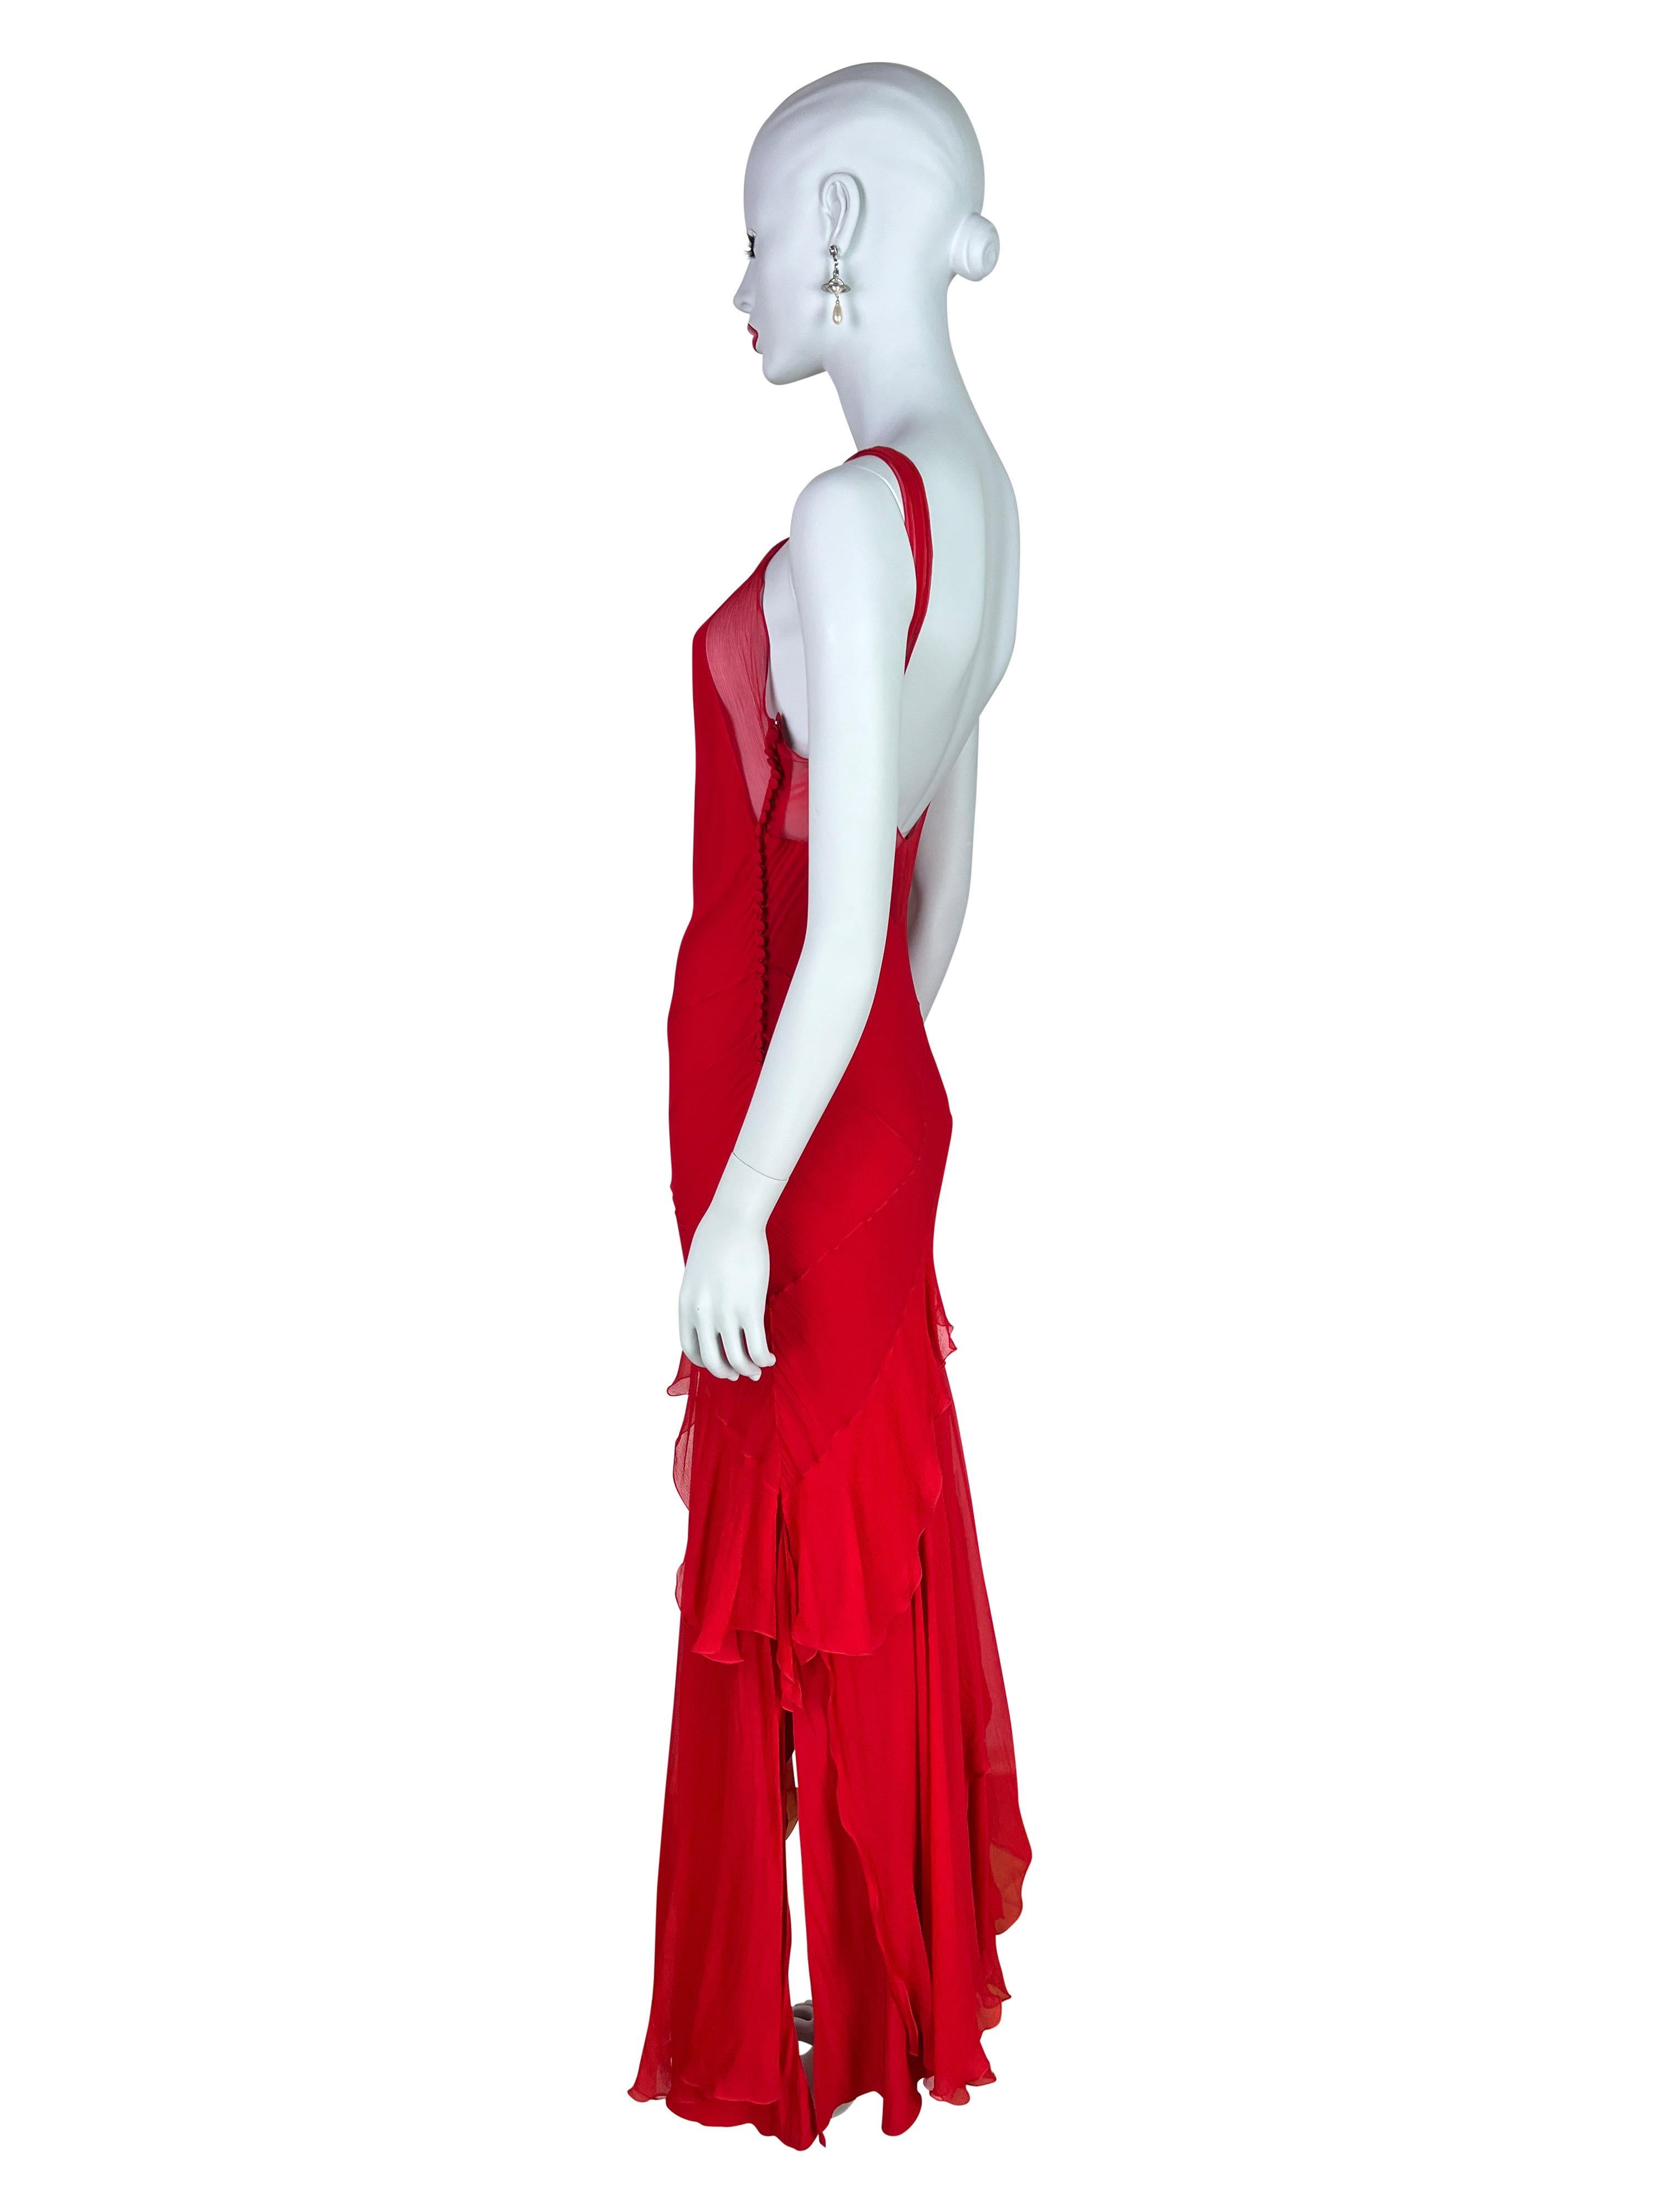 Dior by John Galliano Spring 2004 Red Bias Cut Silk Chiffon Dress 3